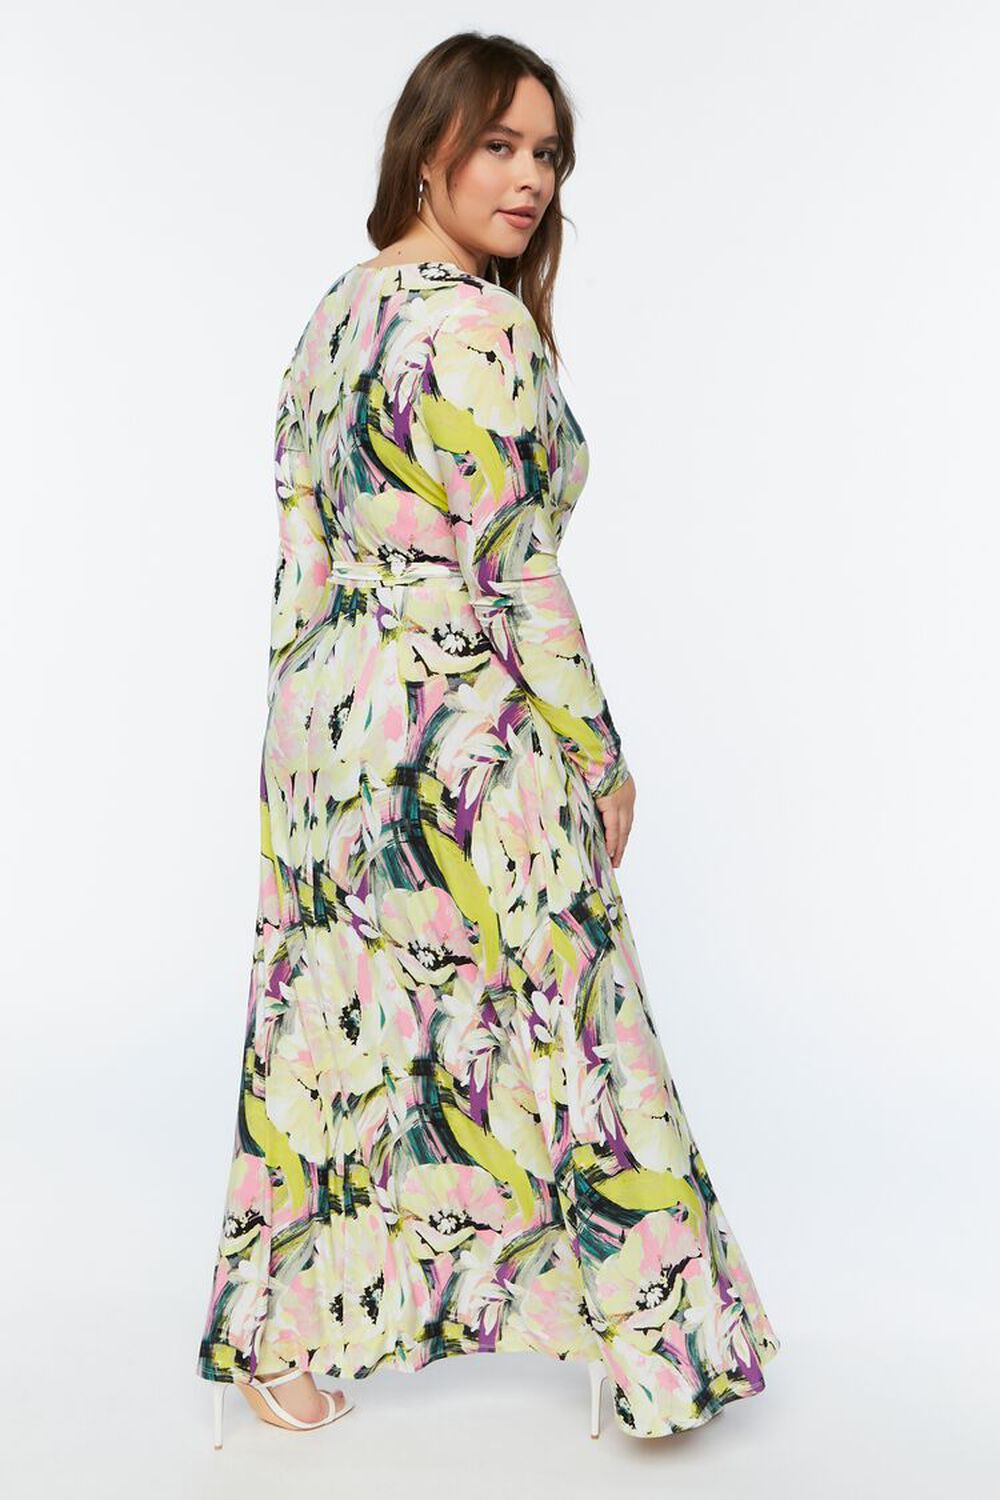 NEUTRAL GREY/MULTI Plus Size Floral Watercolor Surplice Maxi Dress, image 3